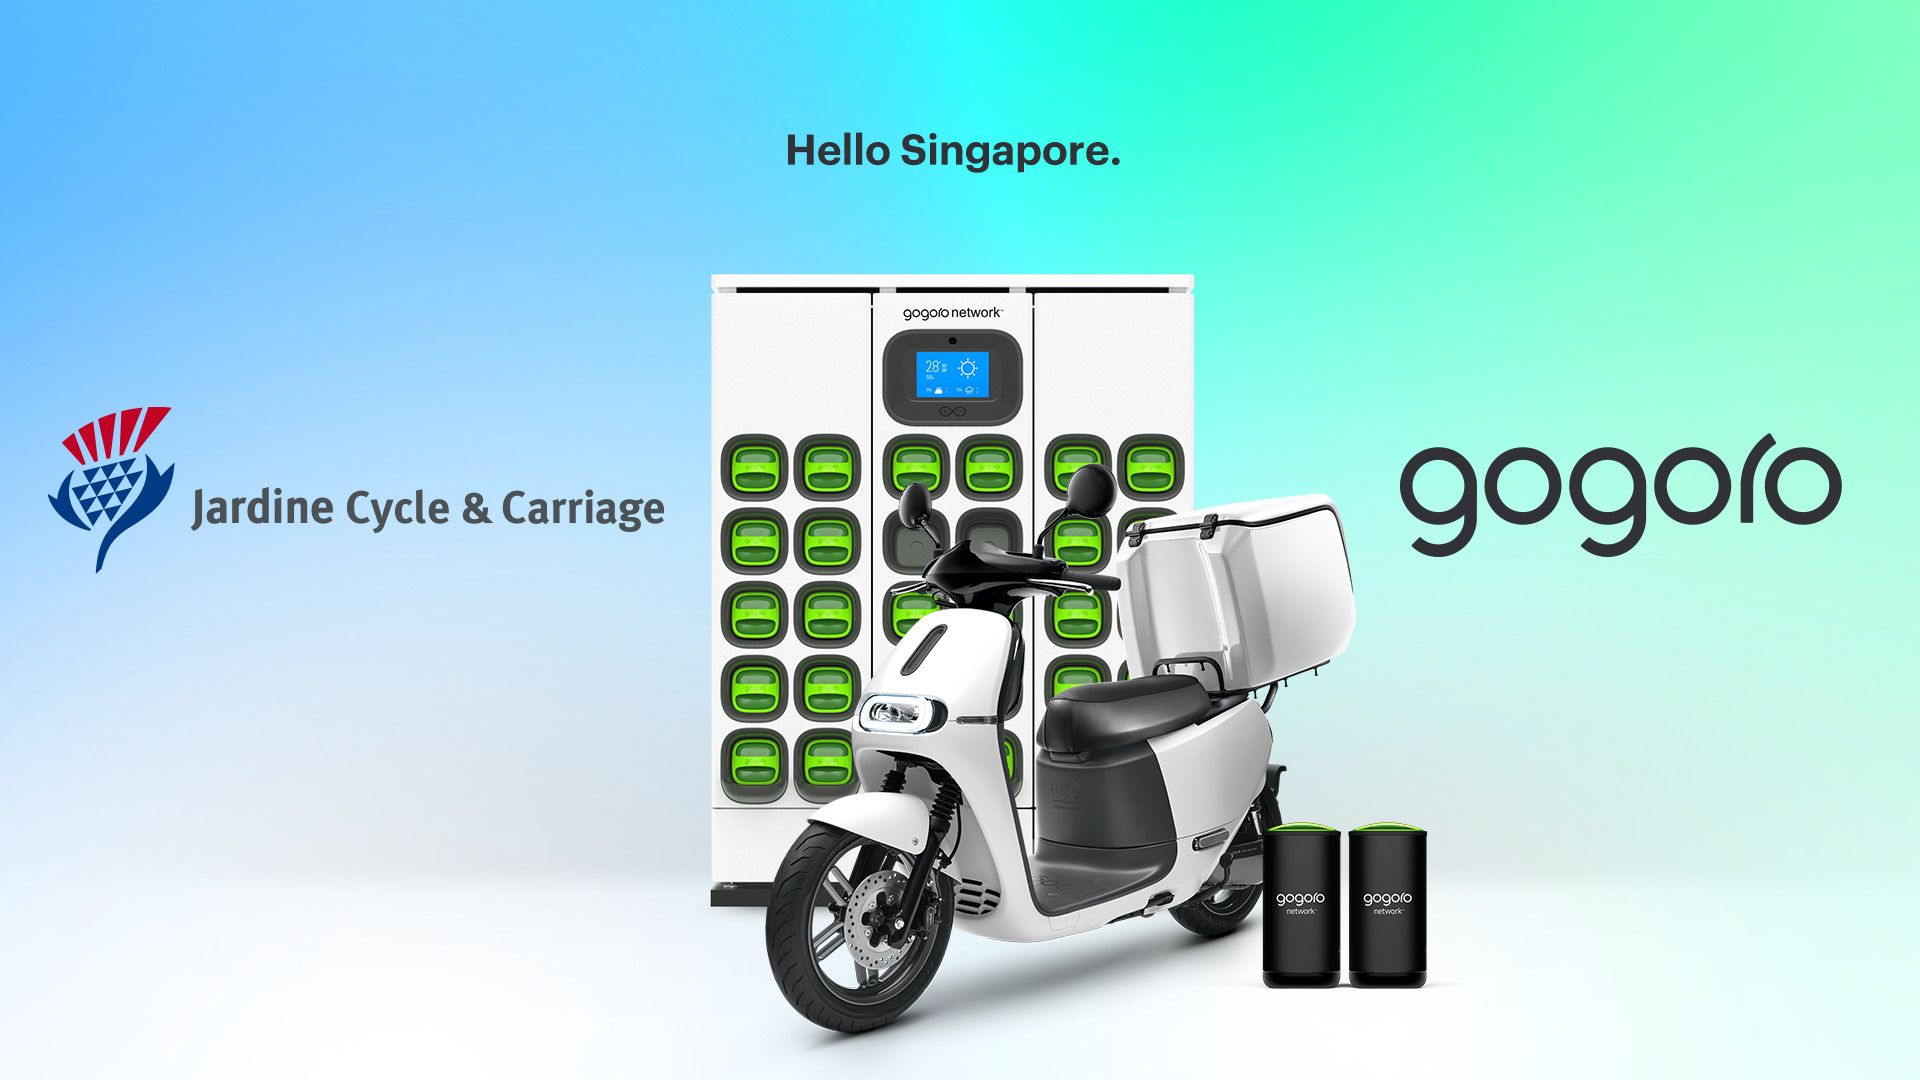 Gogoro 宣佈於新加坡建立二輪電動機車和電池交換合作夥伴關係